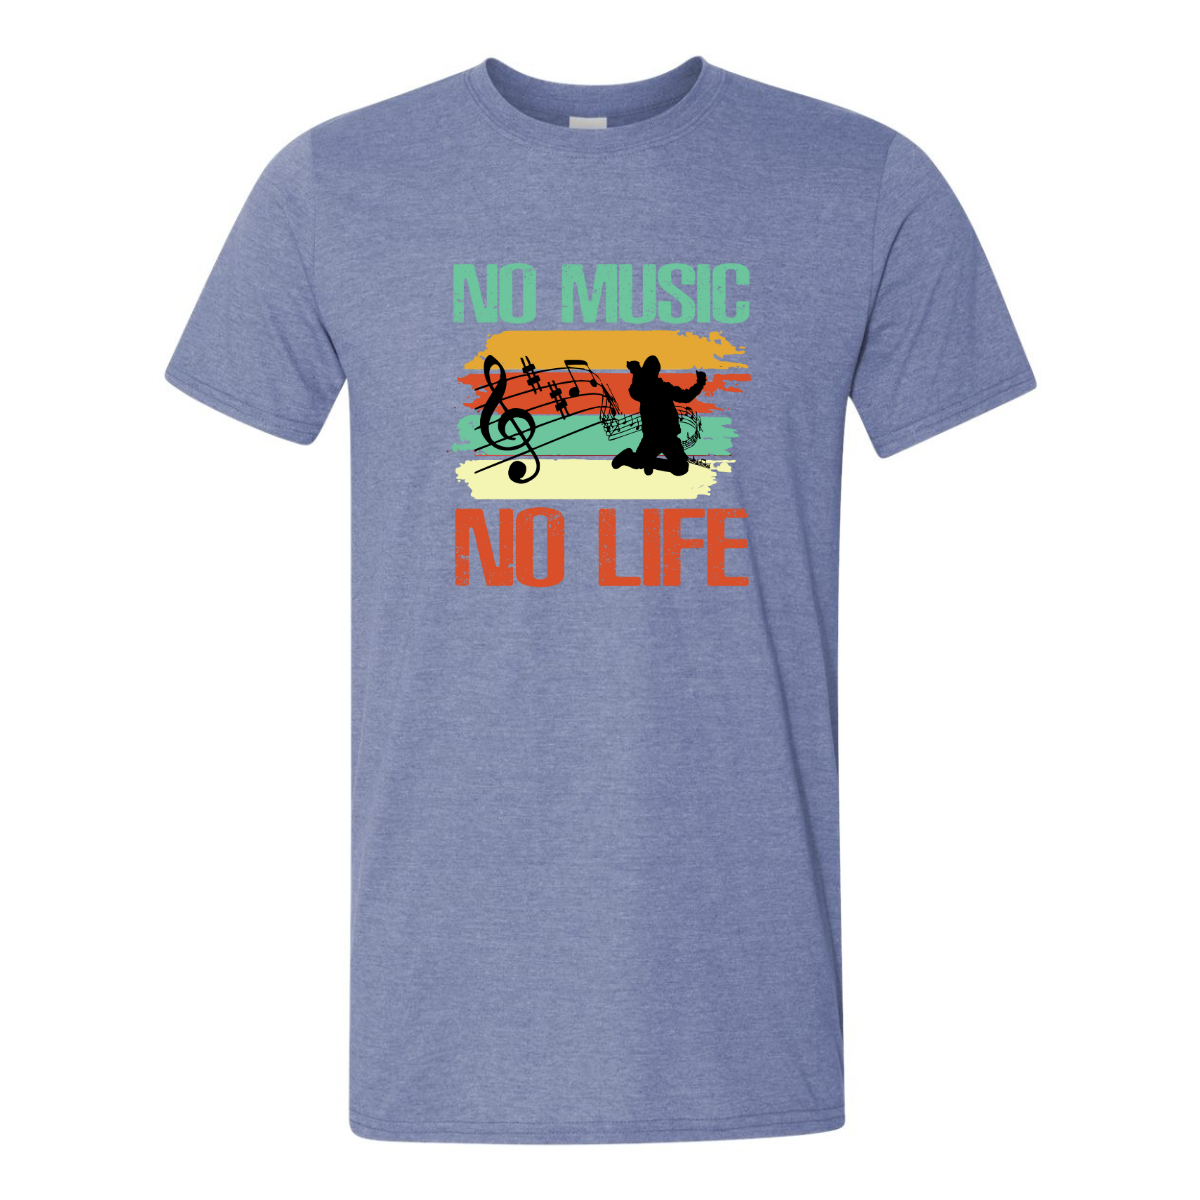 ADULT Unisex T-Shirt MUSA051 NO MUSIC NO LIFE